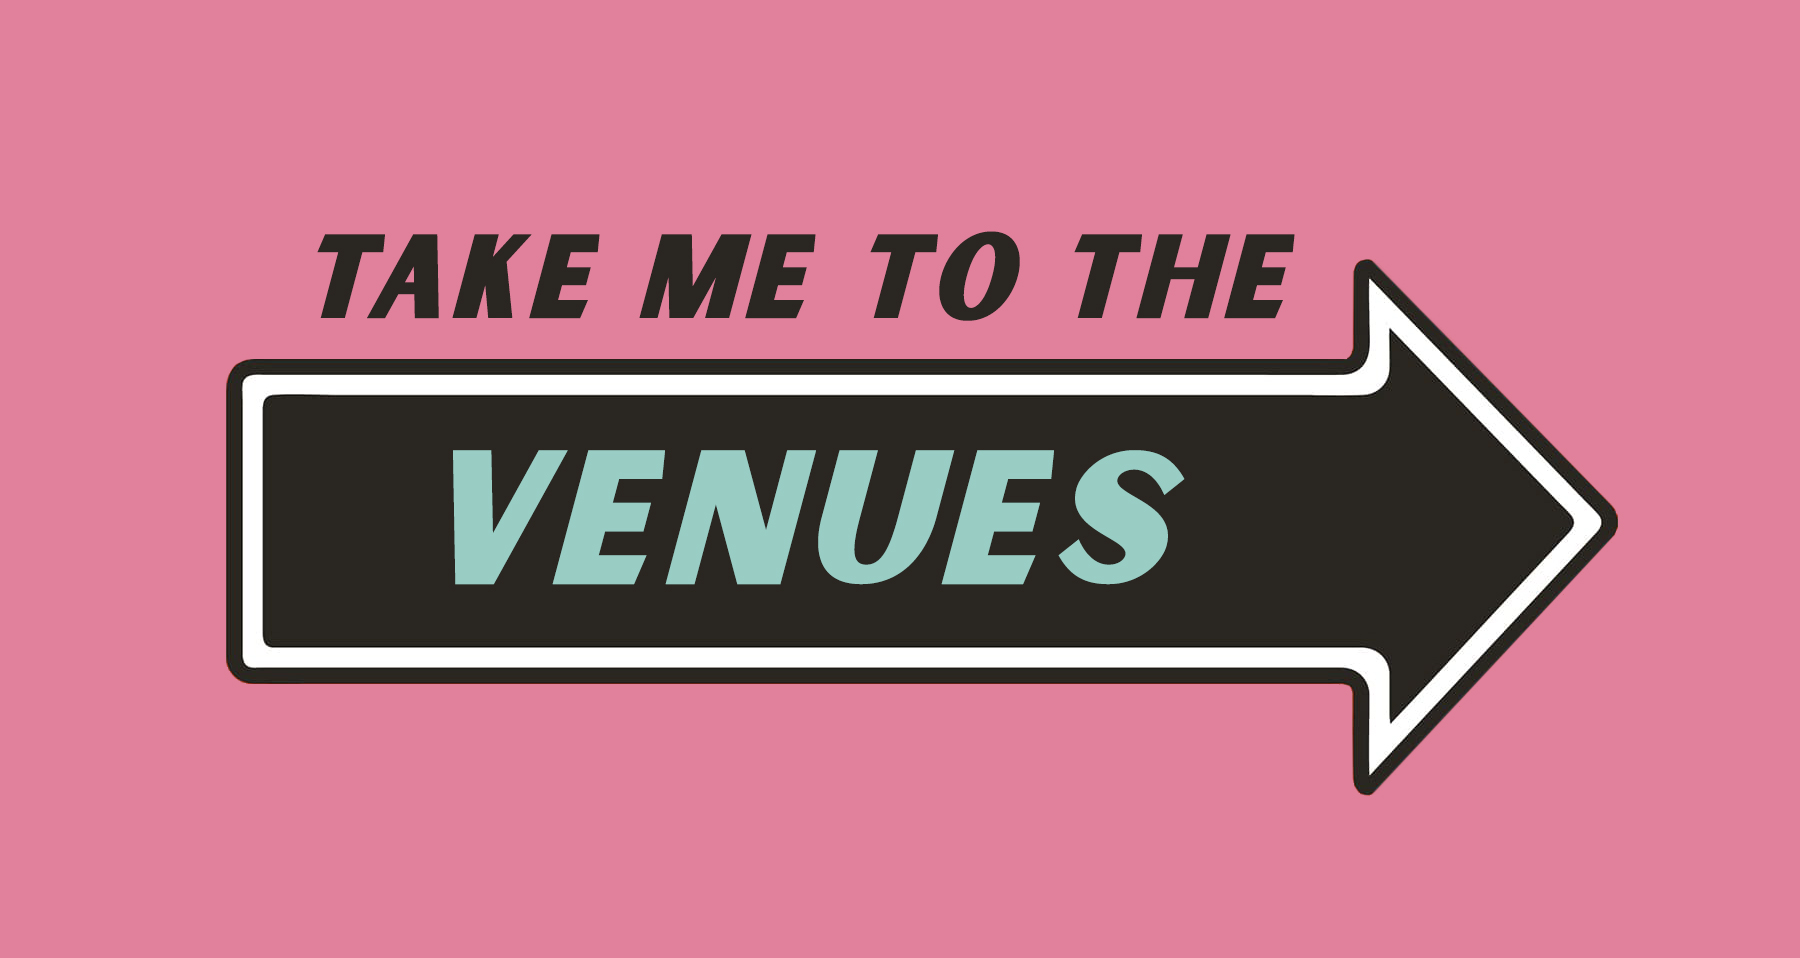 Take me to the venues